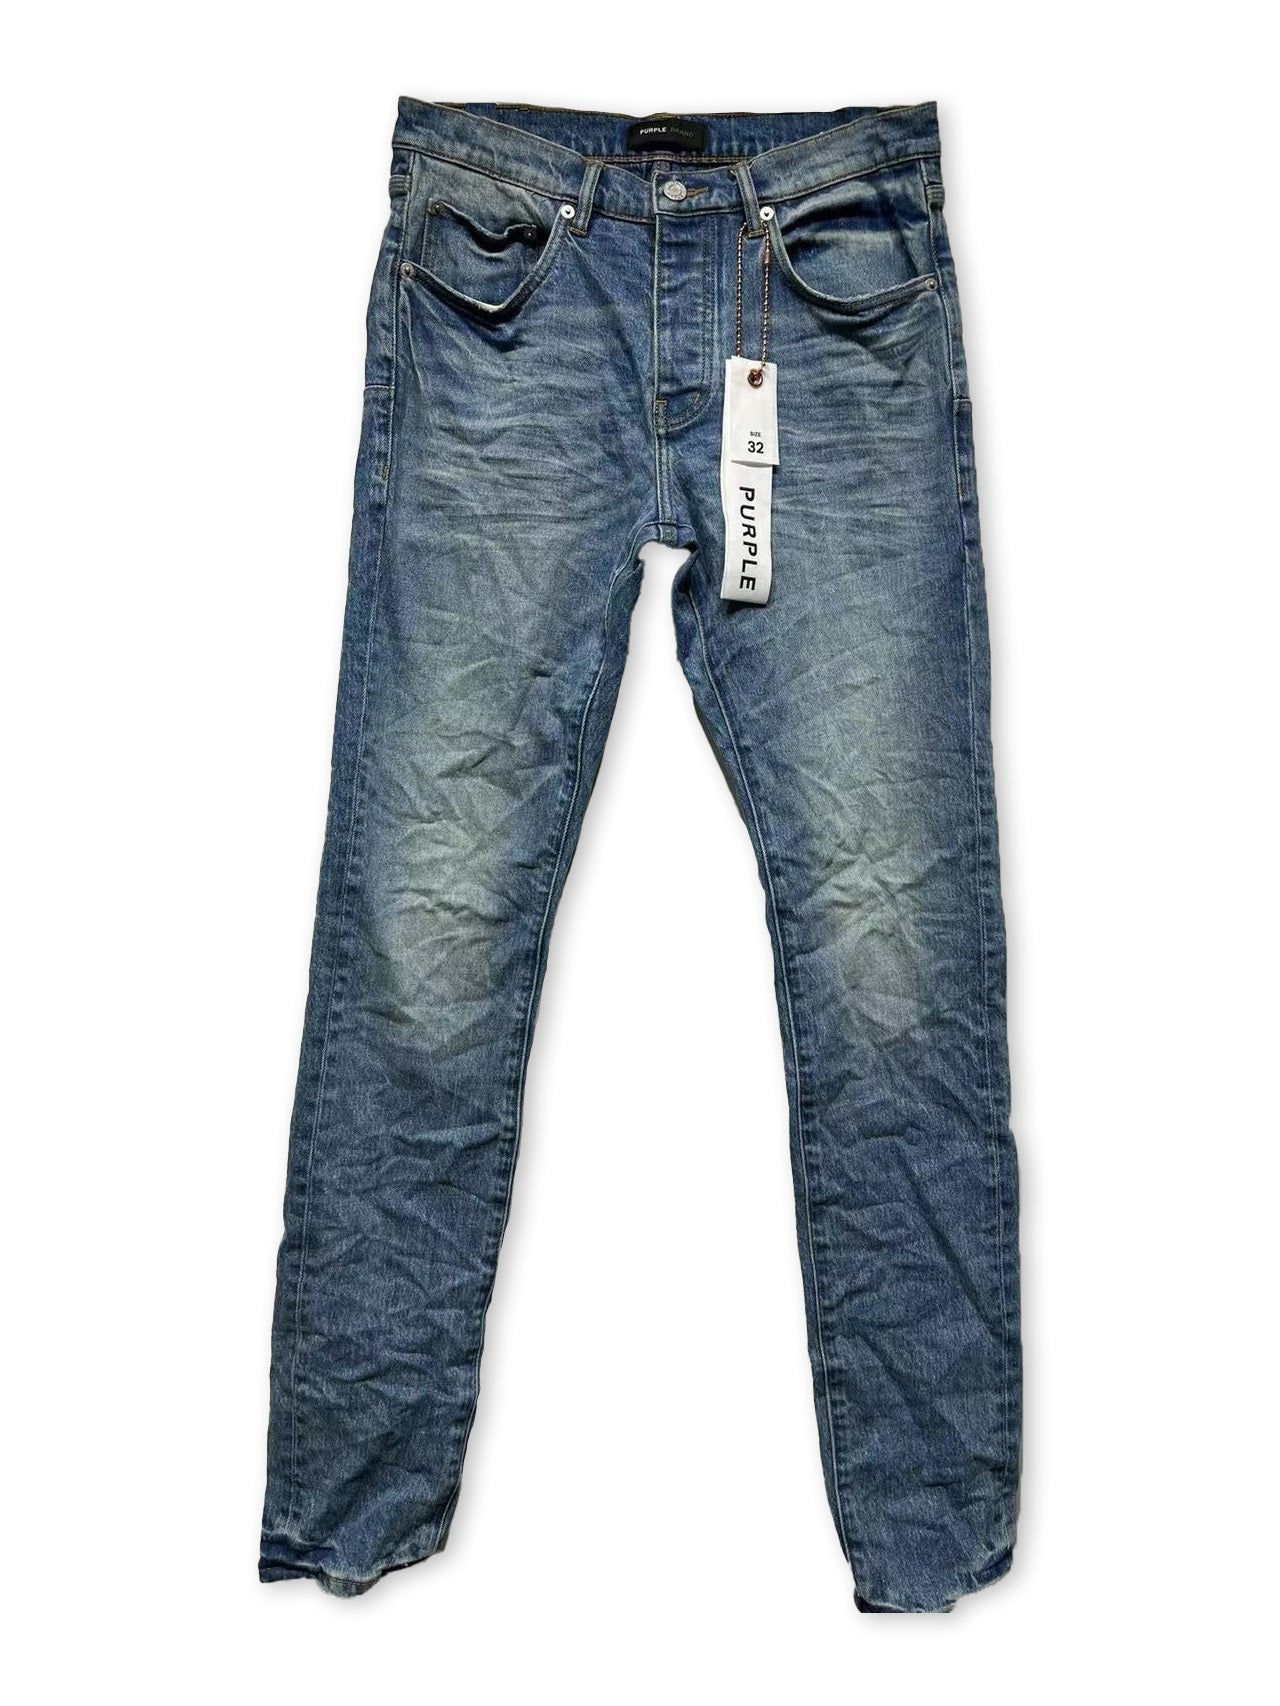 Purple Brand Vintage Slate Jeans - GREY - Civilized Nation